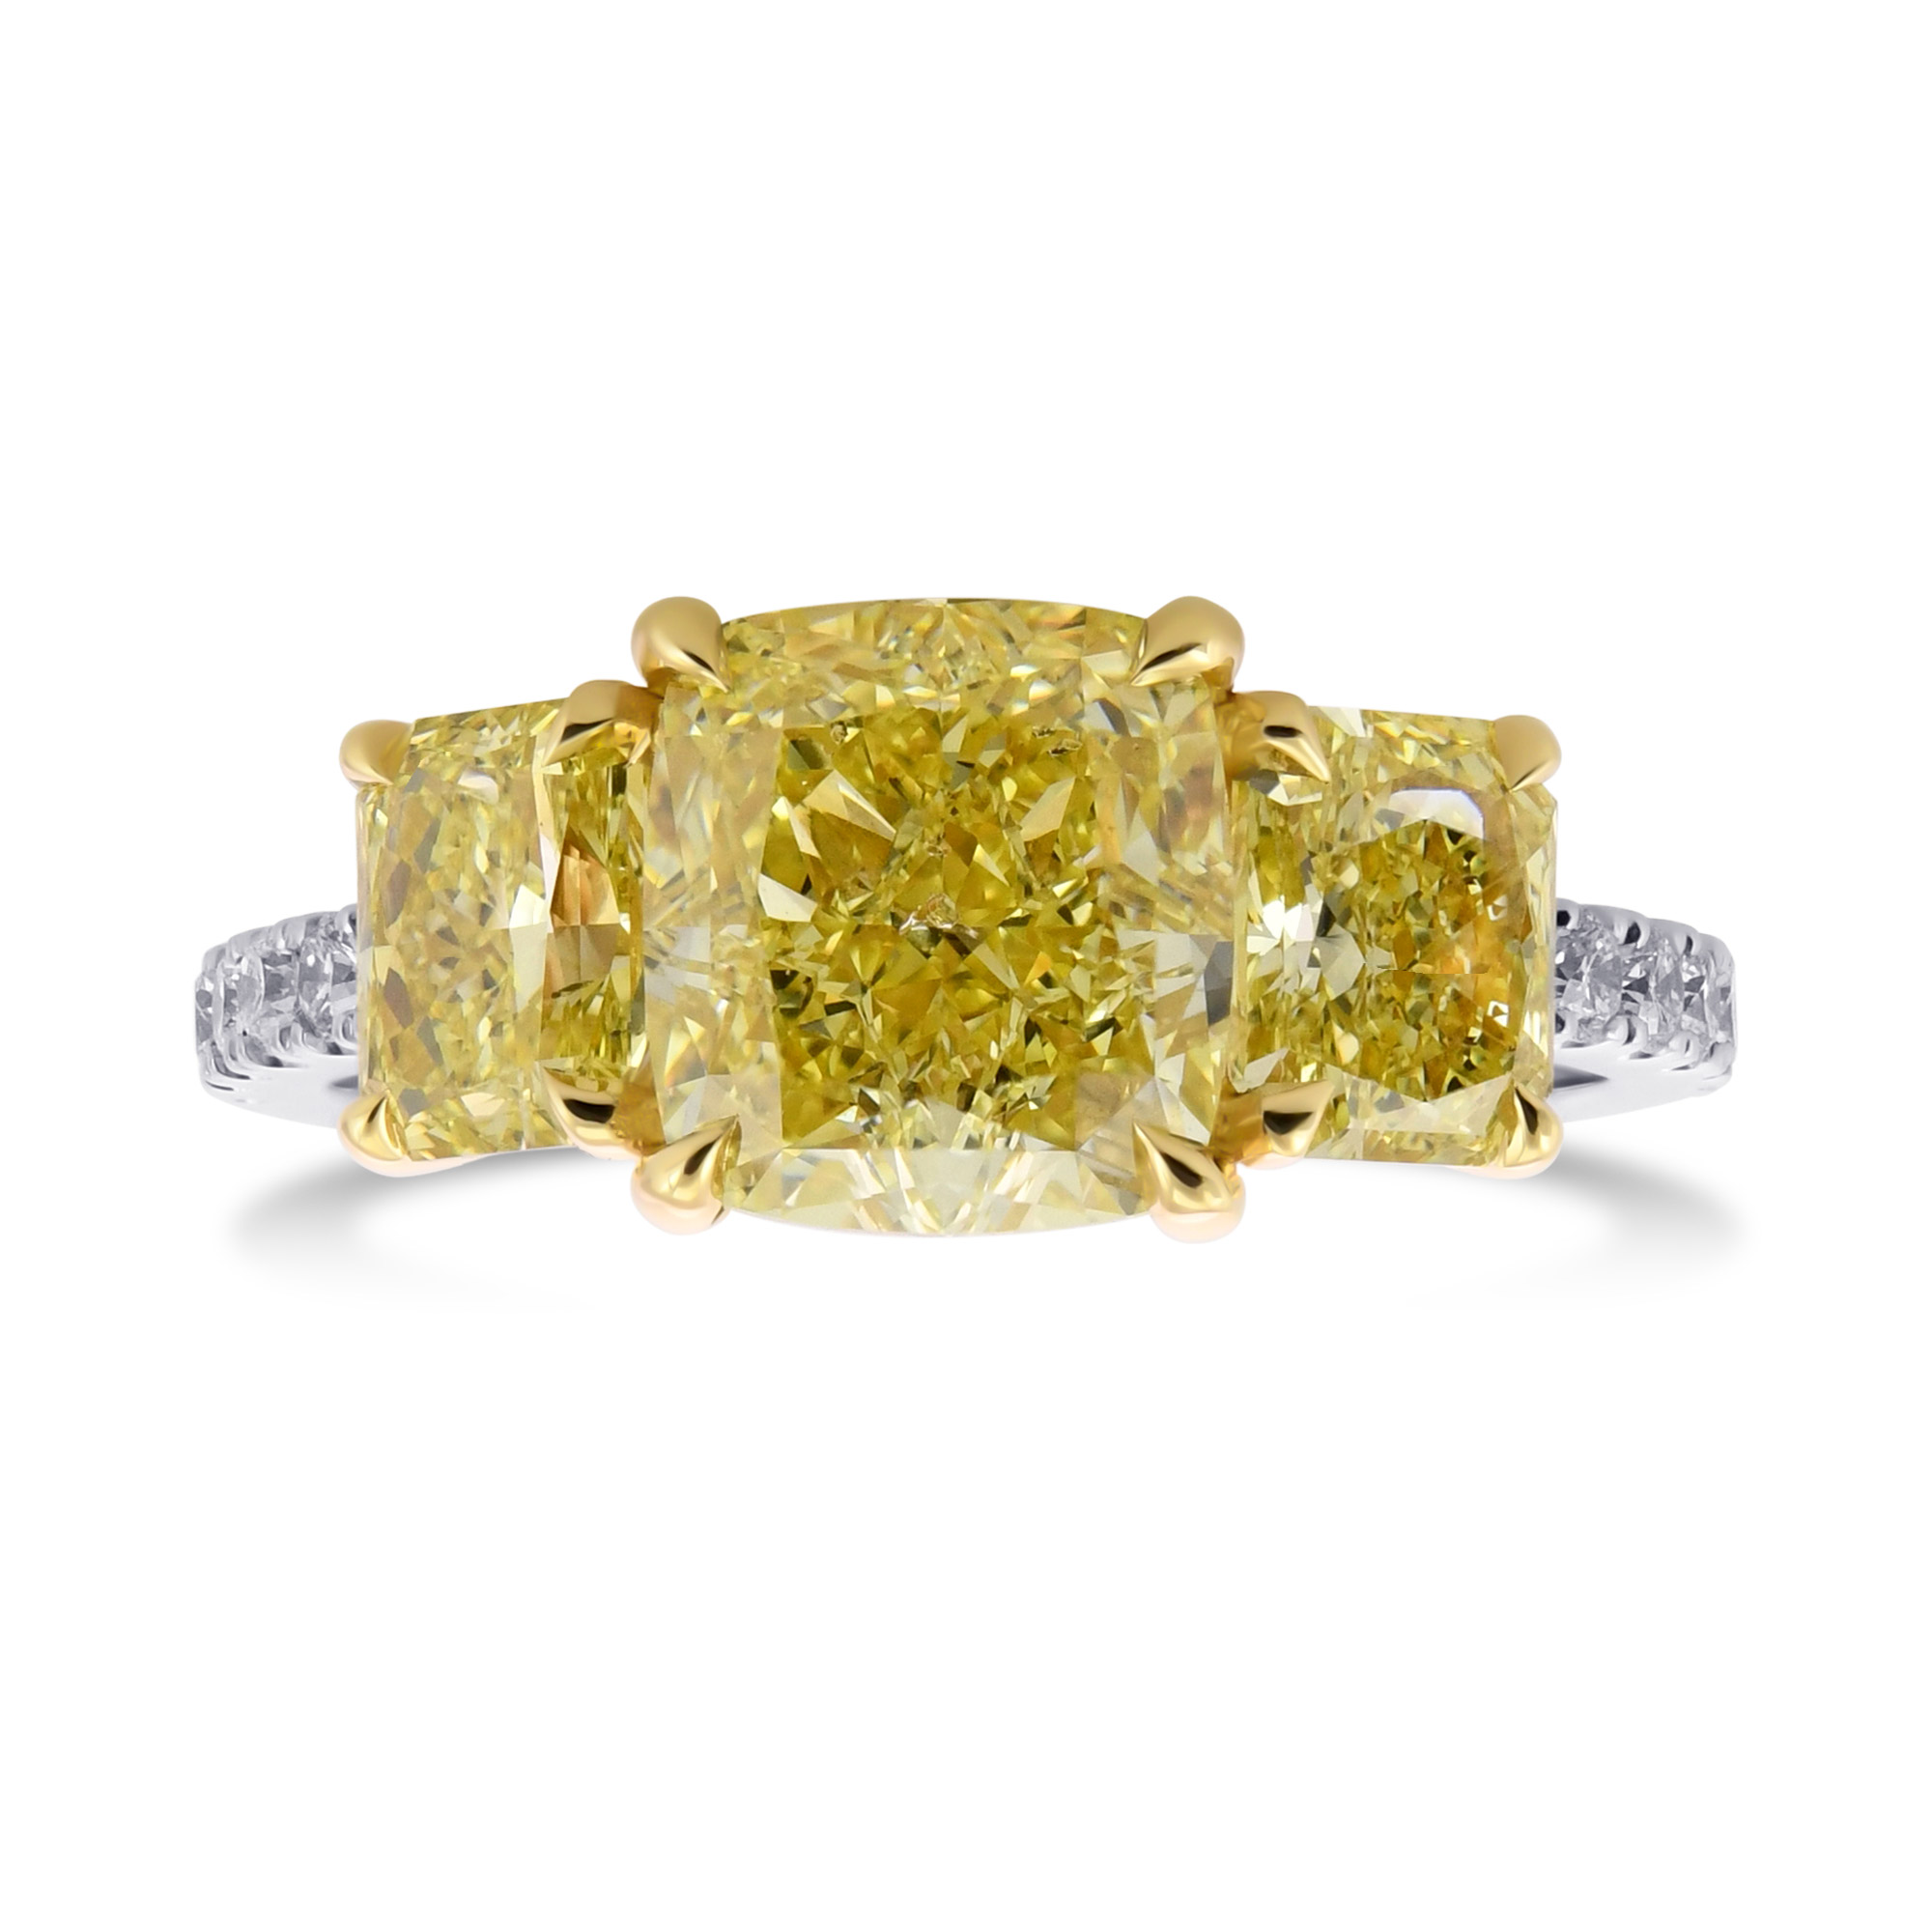 Fancy Intense Yellow Cushion Three-stone Diamond Ring, SKU 32174M (4.88Ct TW)